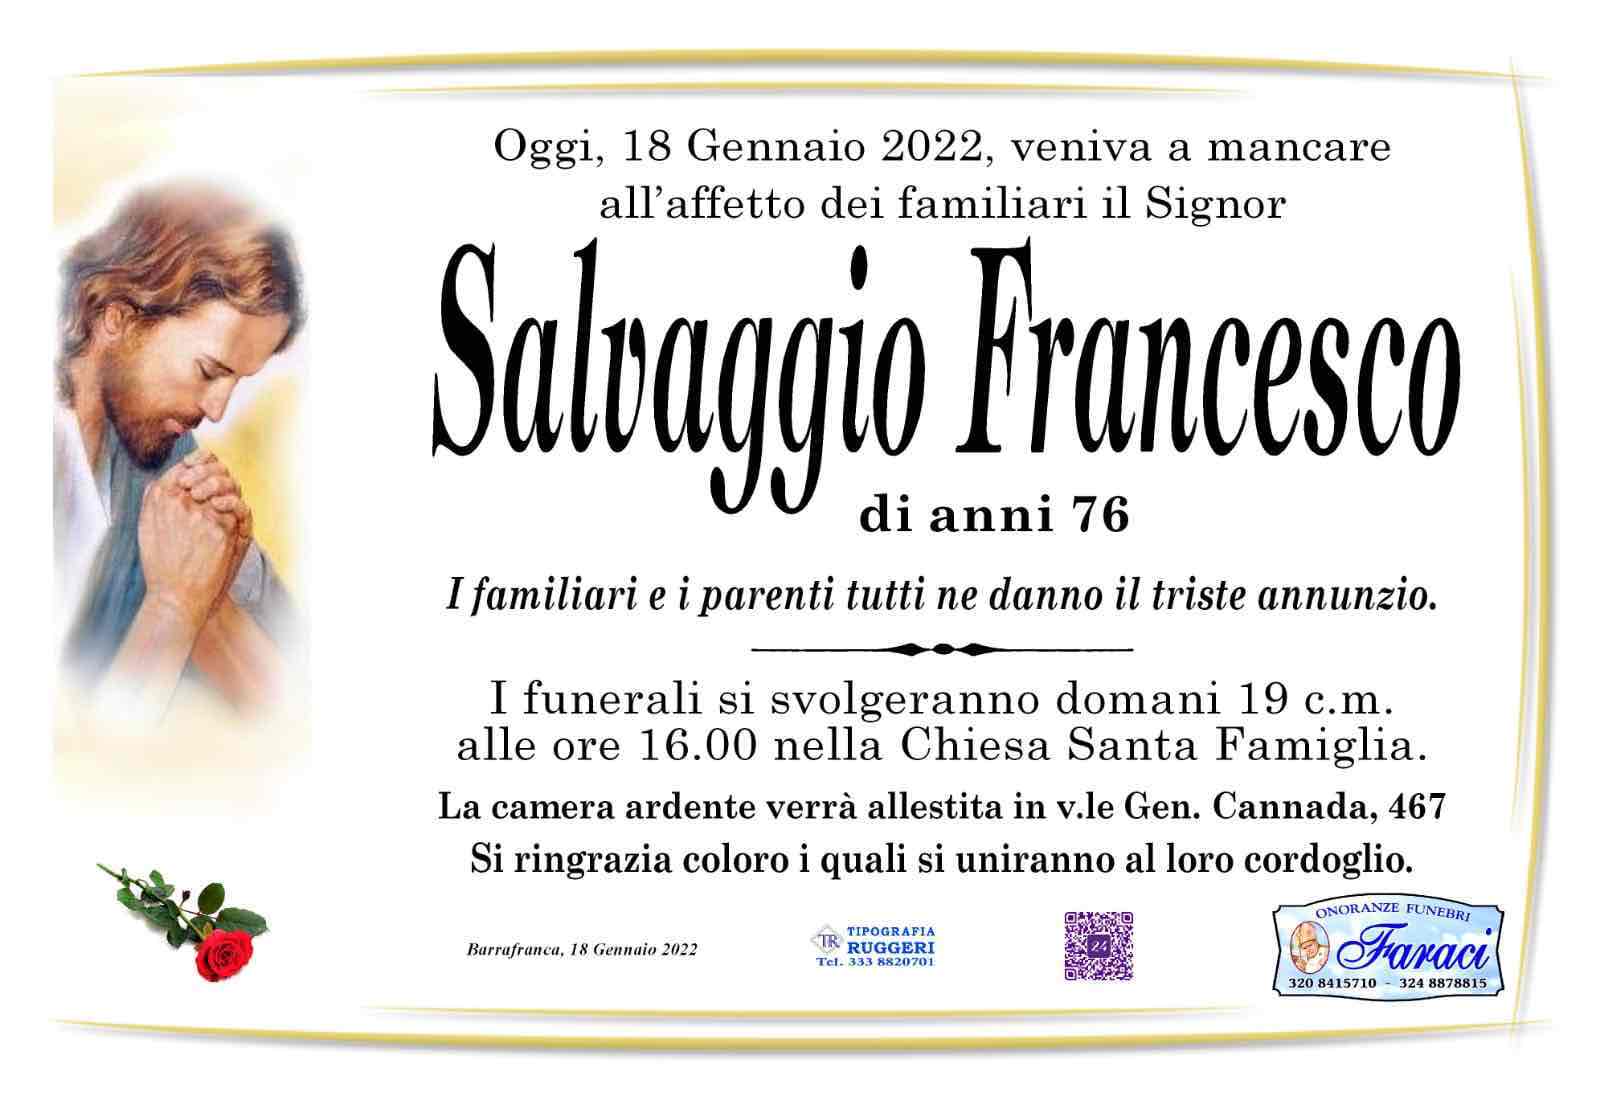 Francesco Salvaggio